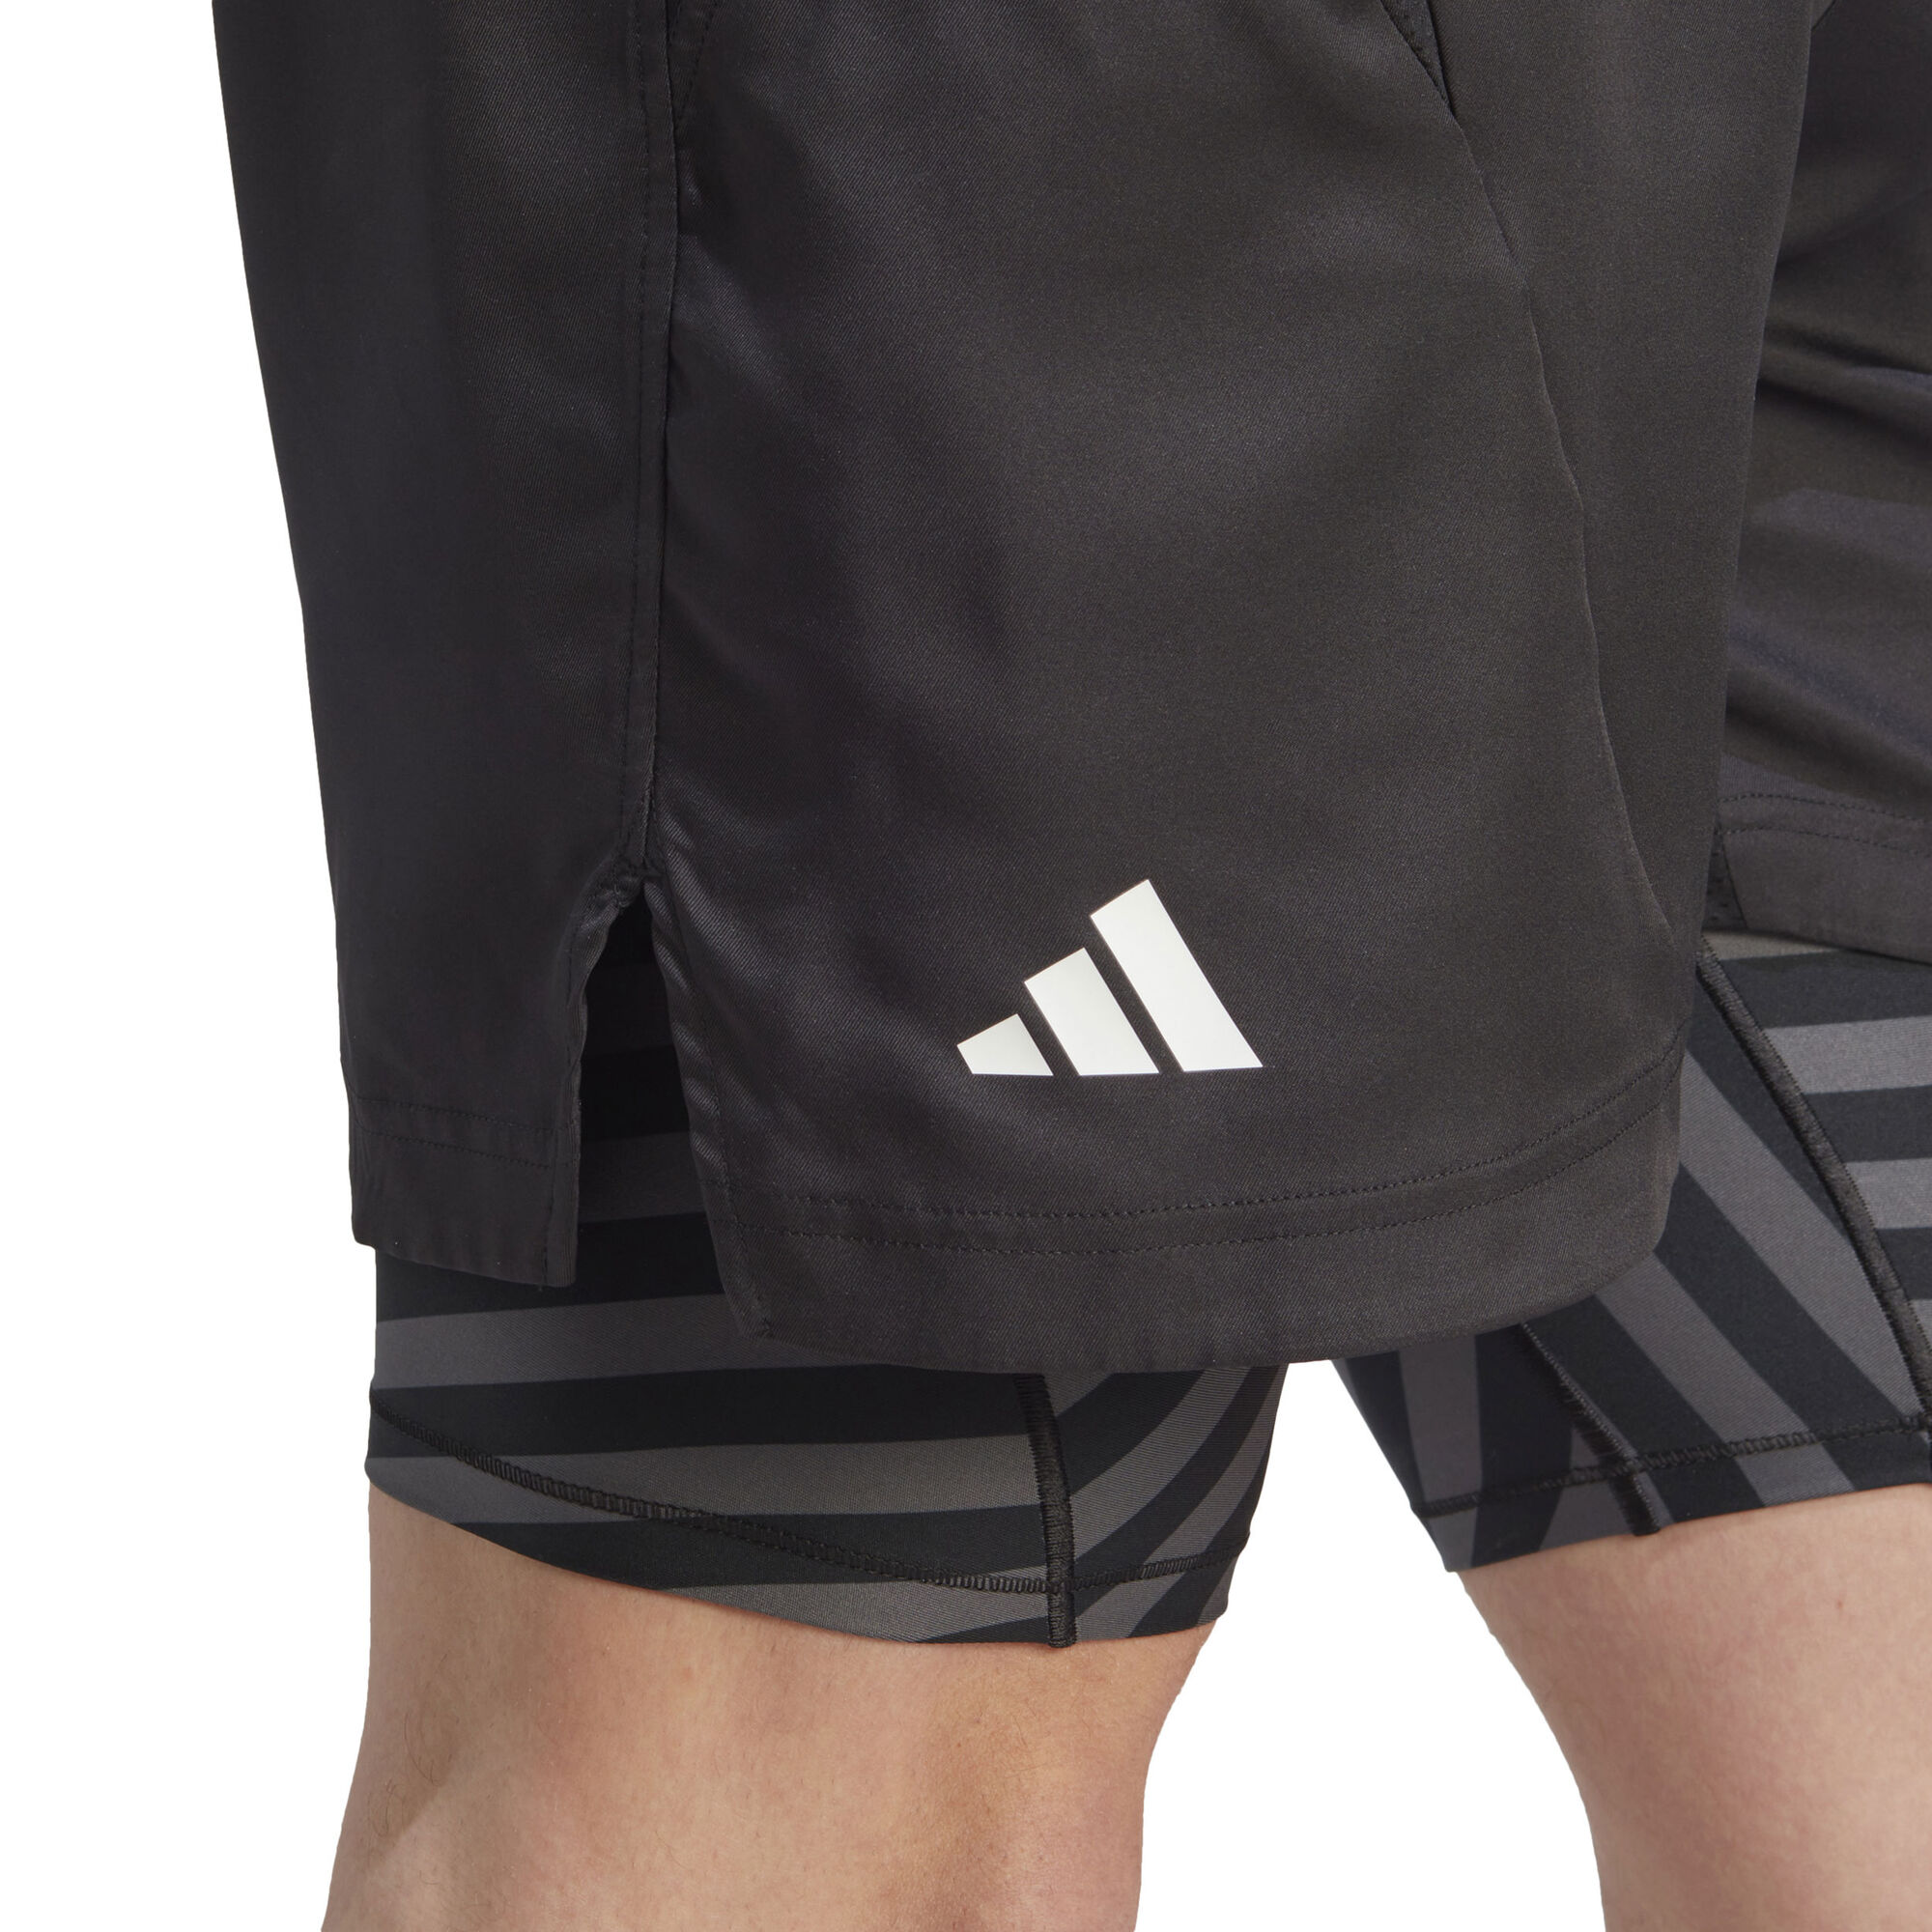 Mallas cortas Own the Run Black  Pantalones cortos Adidas Hombre